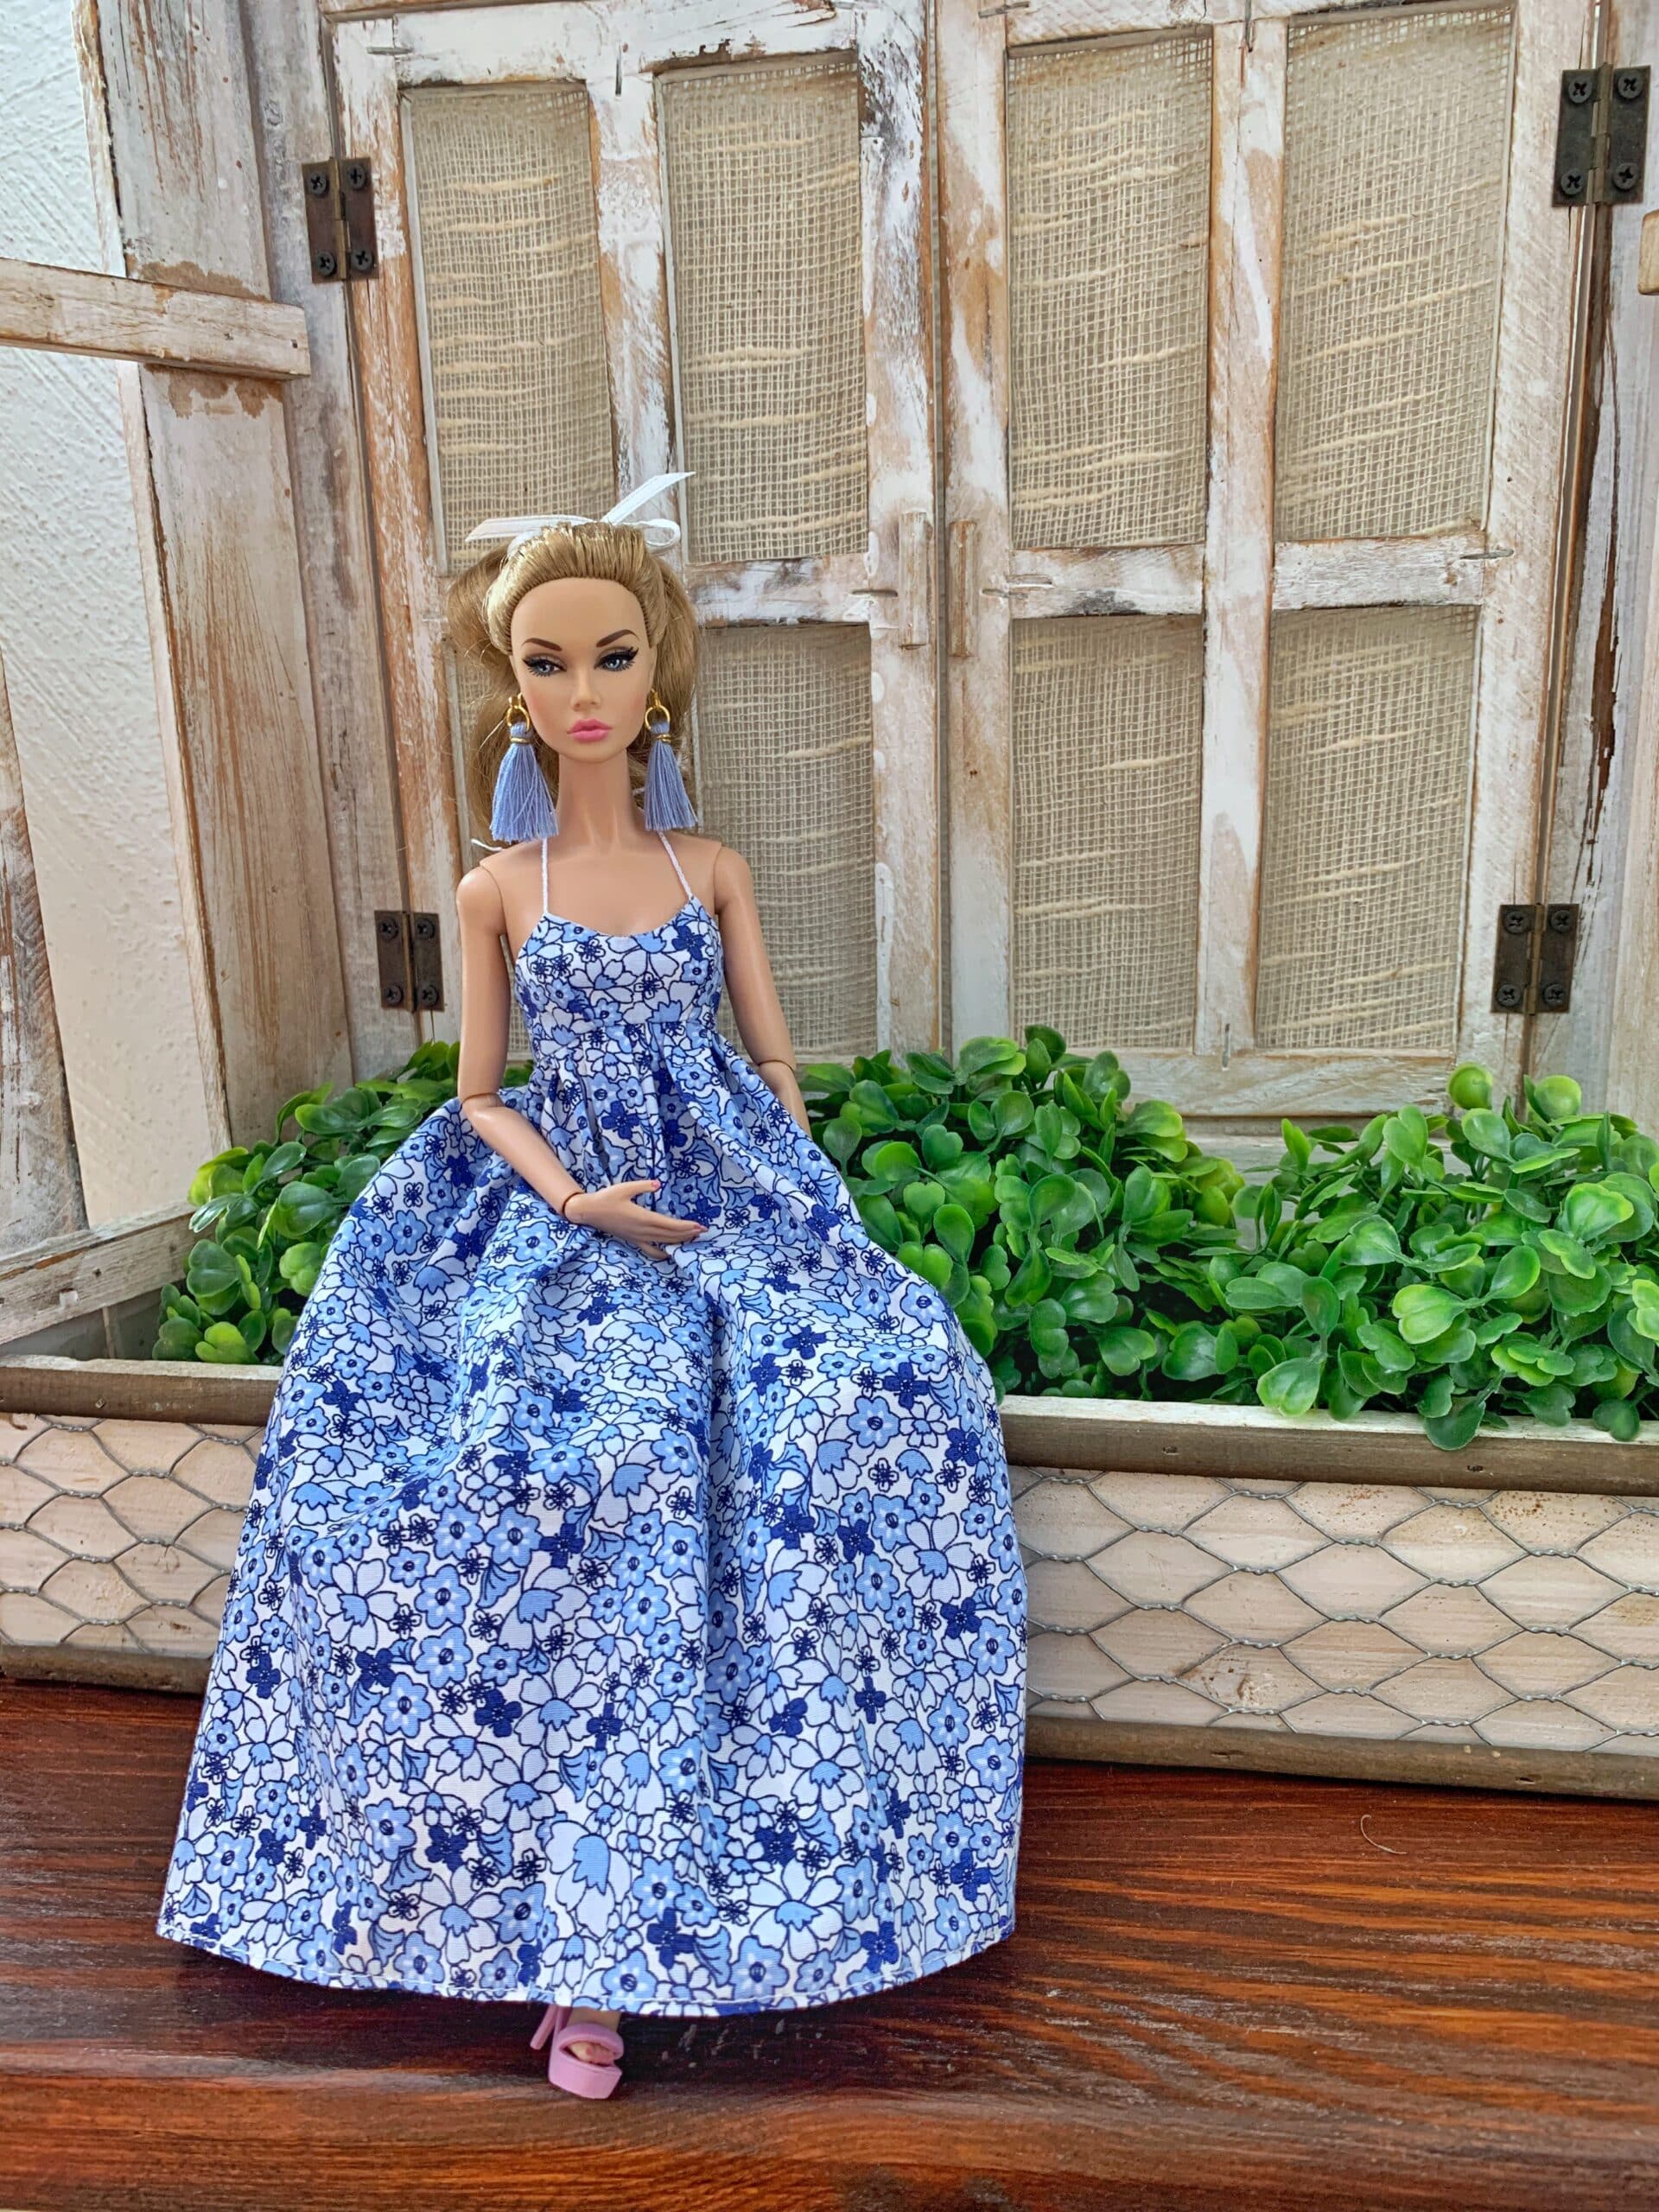 NO Sew Barbie doll dress with pattern (#2) 